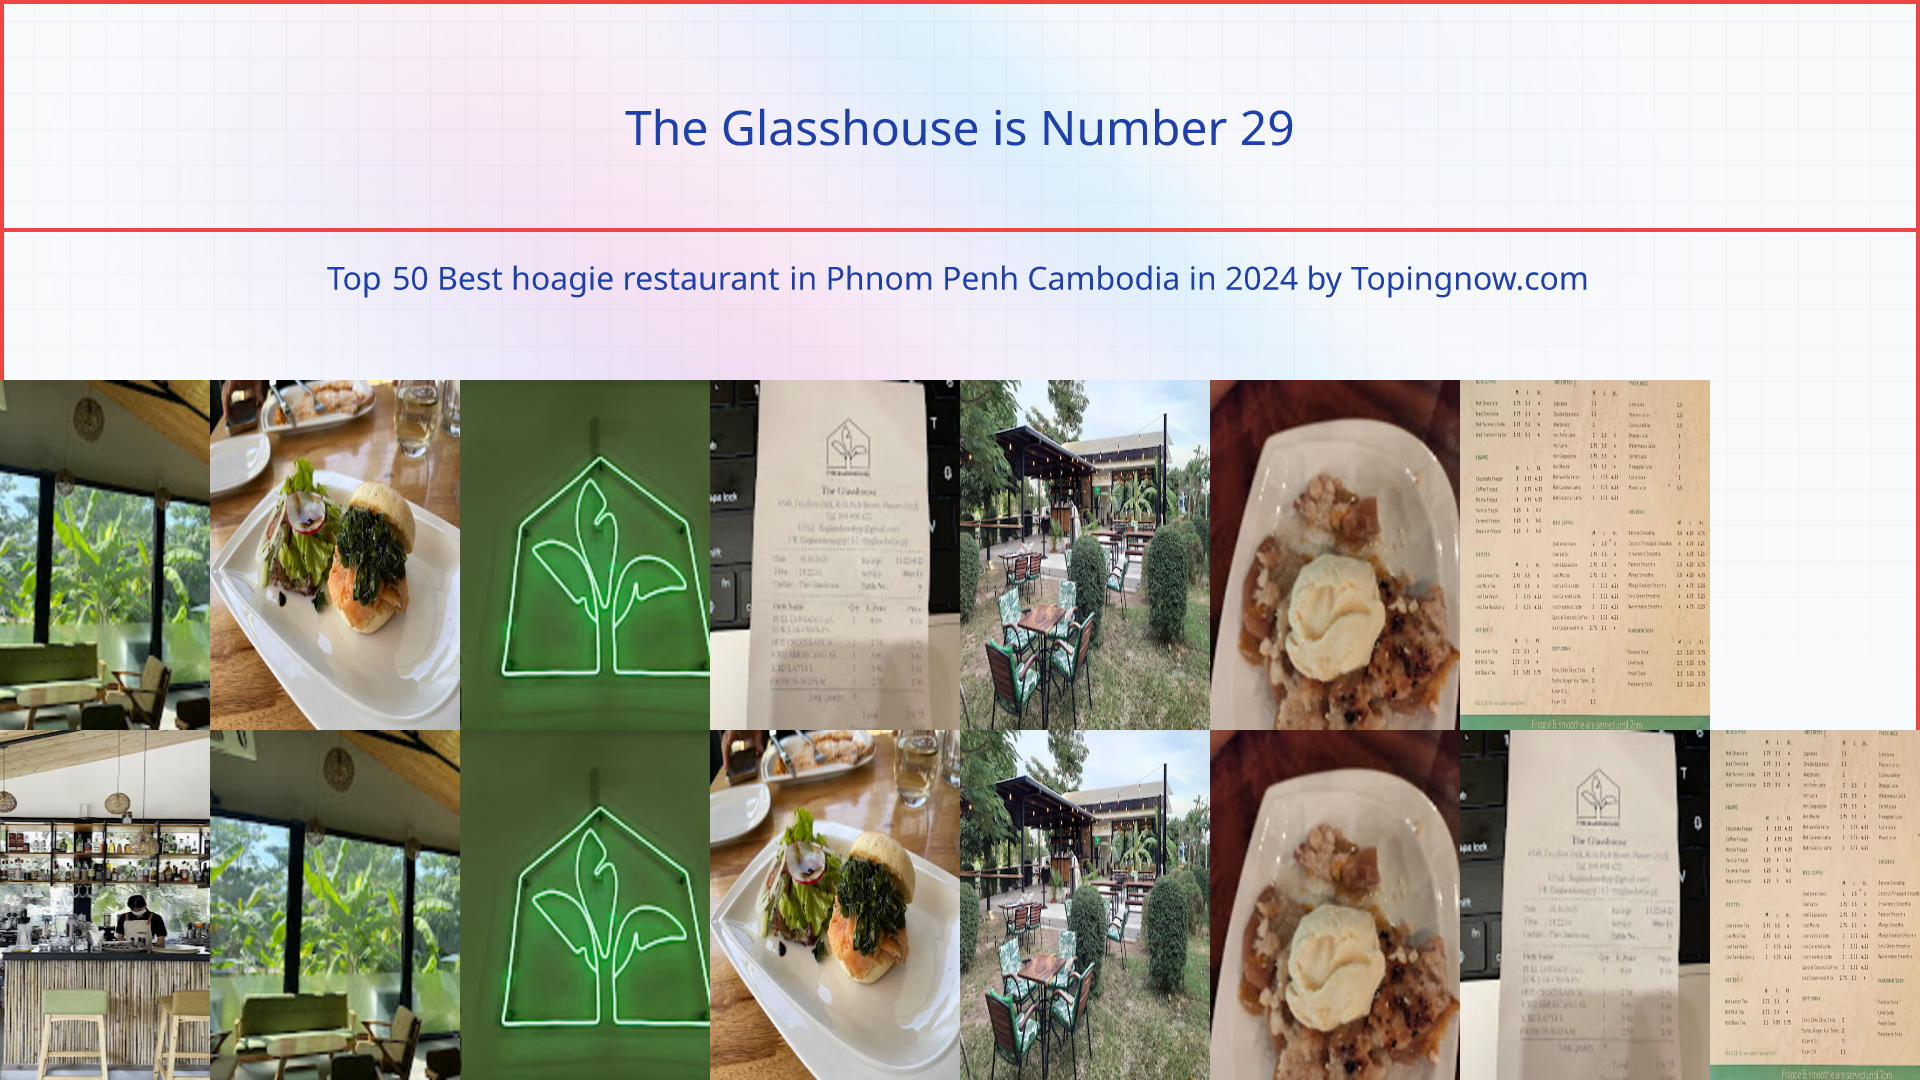 The Glasshouse: Top 50 Best hoagie restaurant in Phnom Penh Cambodia in 2024